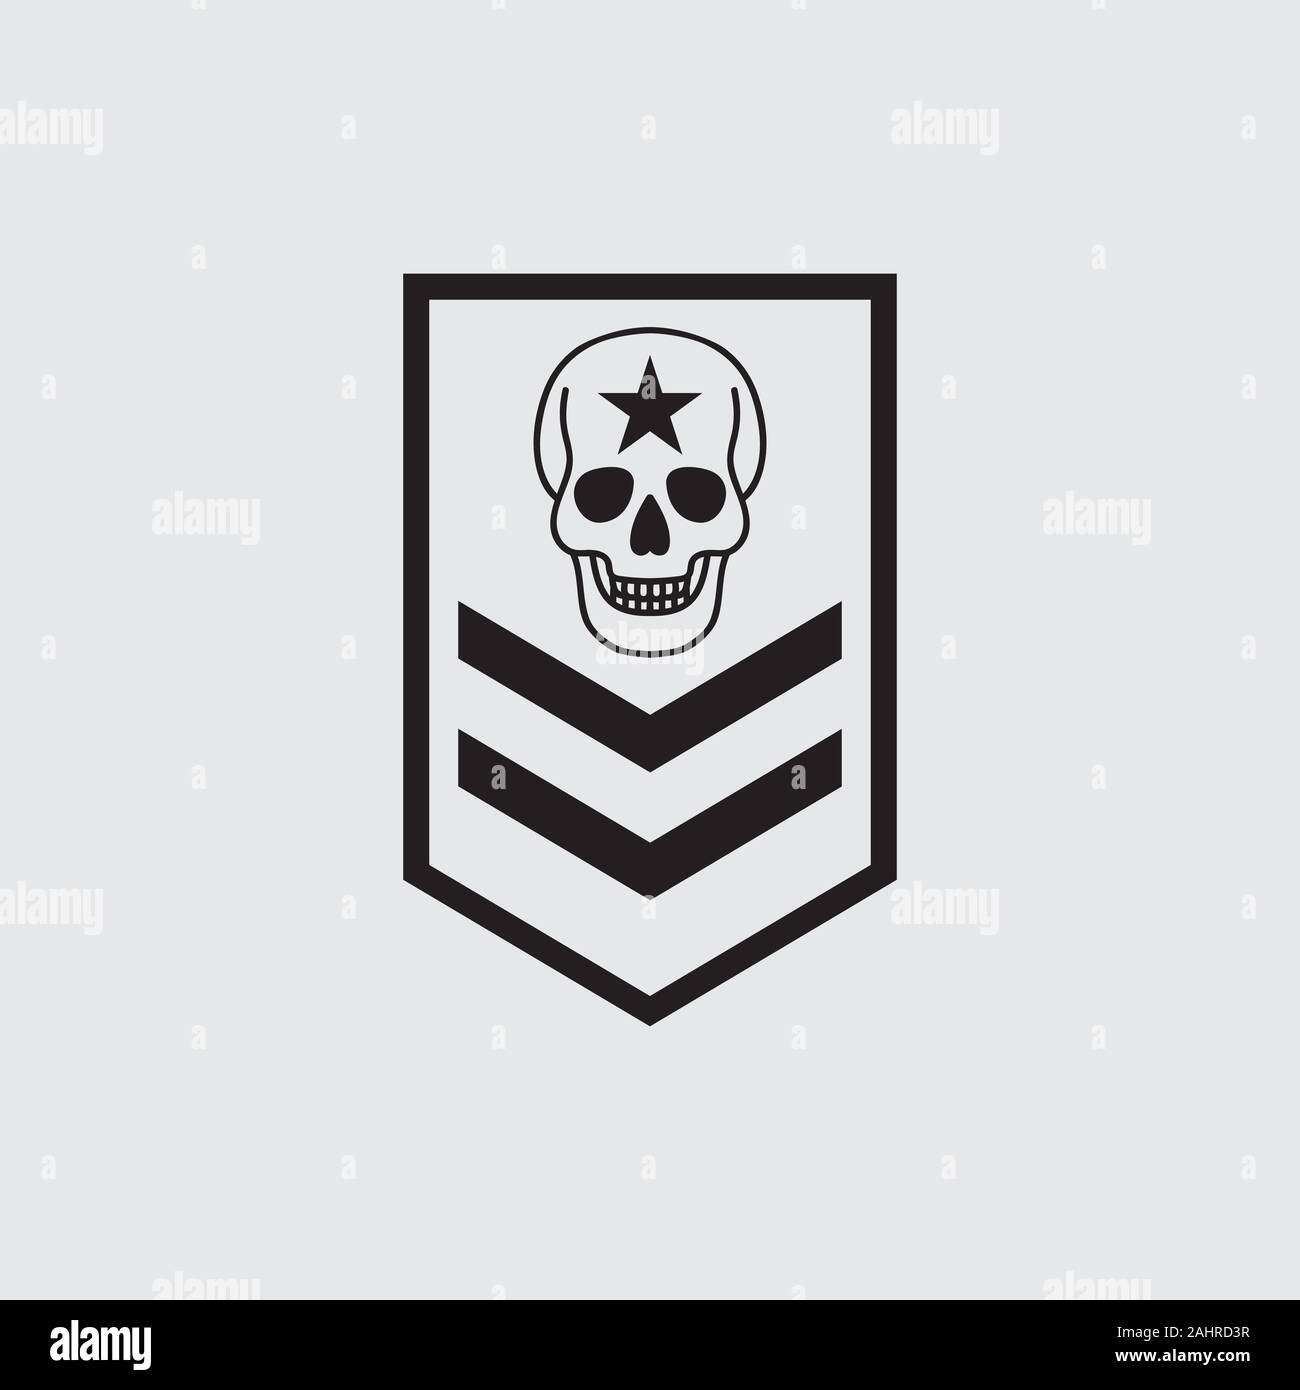 military symbols, Military rank icon vector Stock Vector